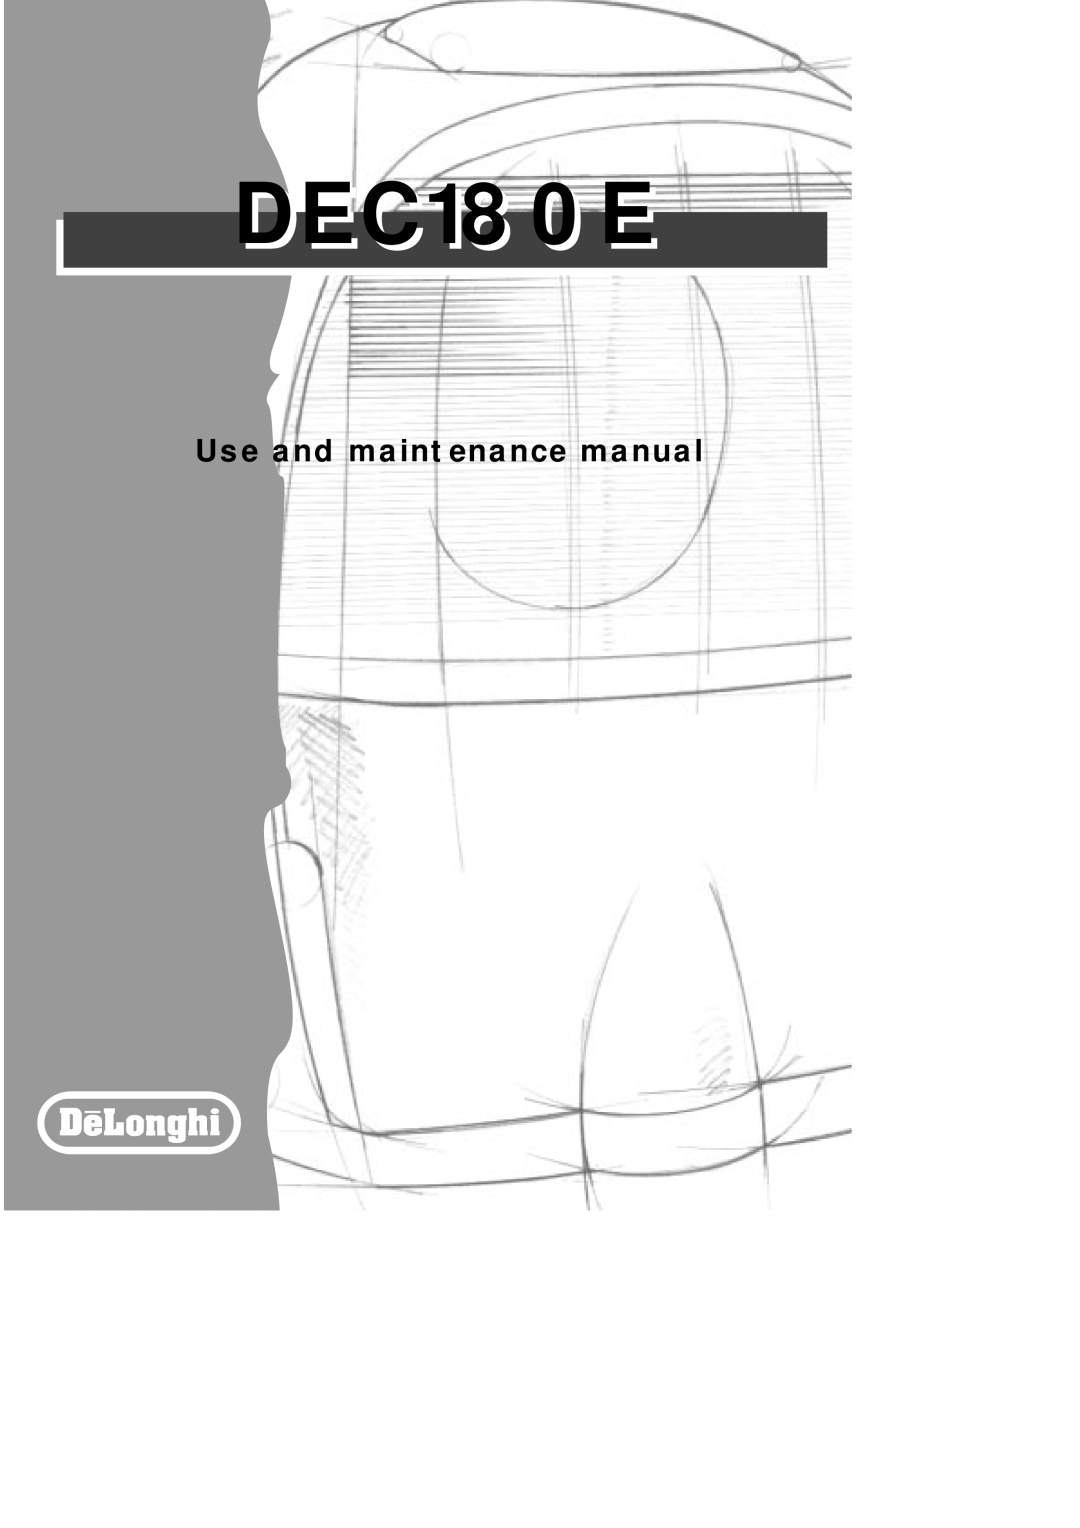 DeLonghi DEC180E manual Use and maintenance manual 